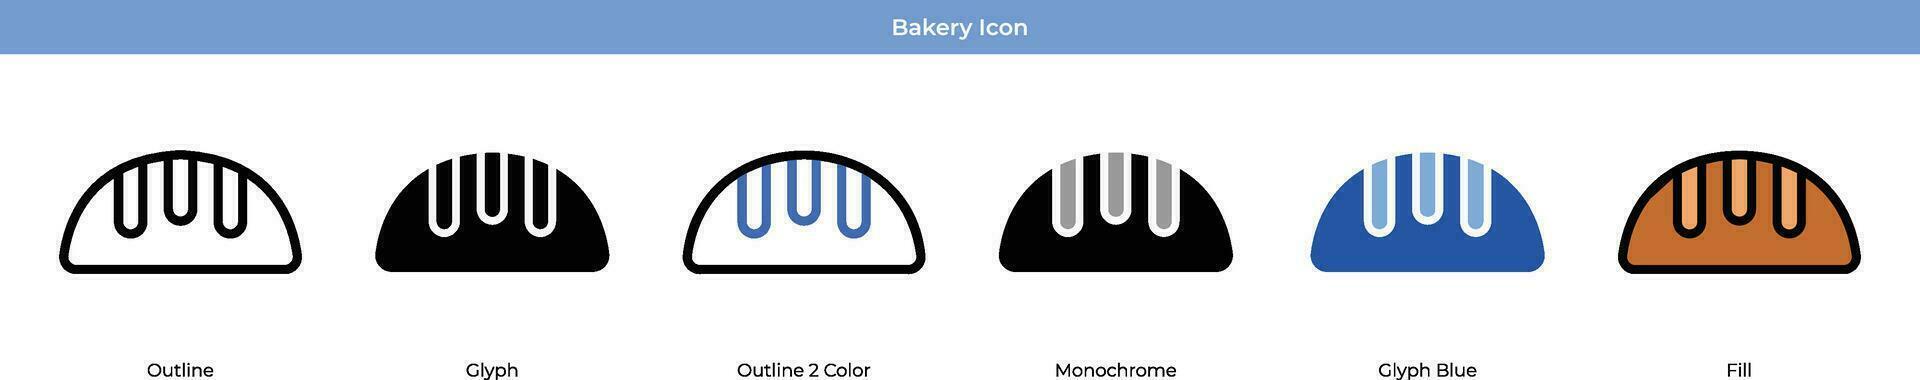 Bakery Icon Set vector